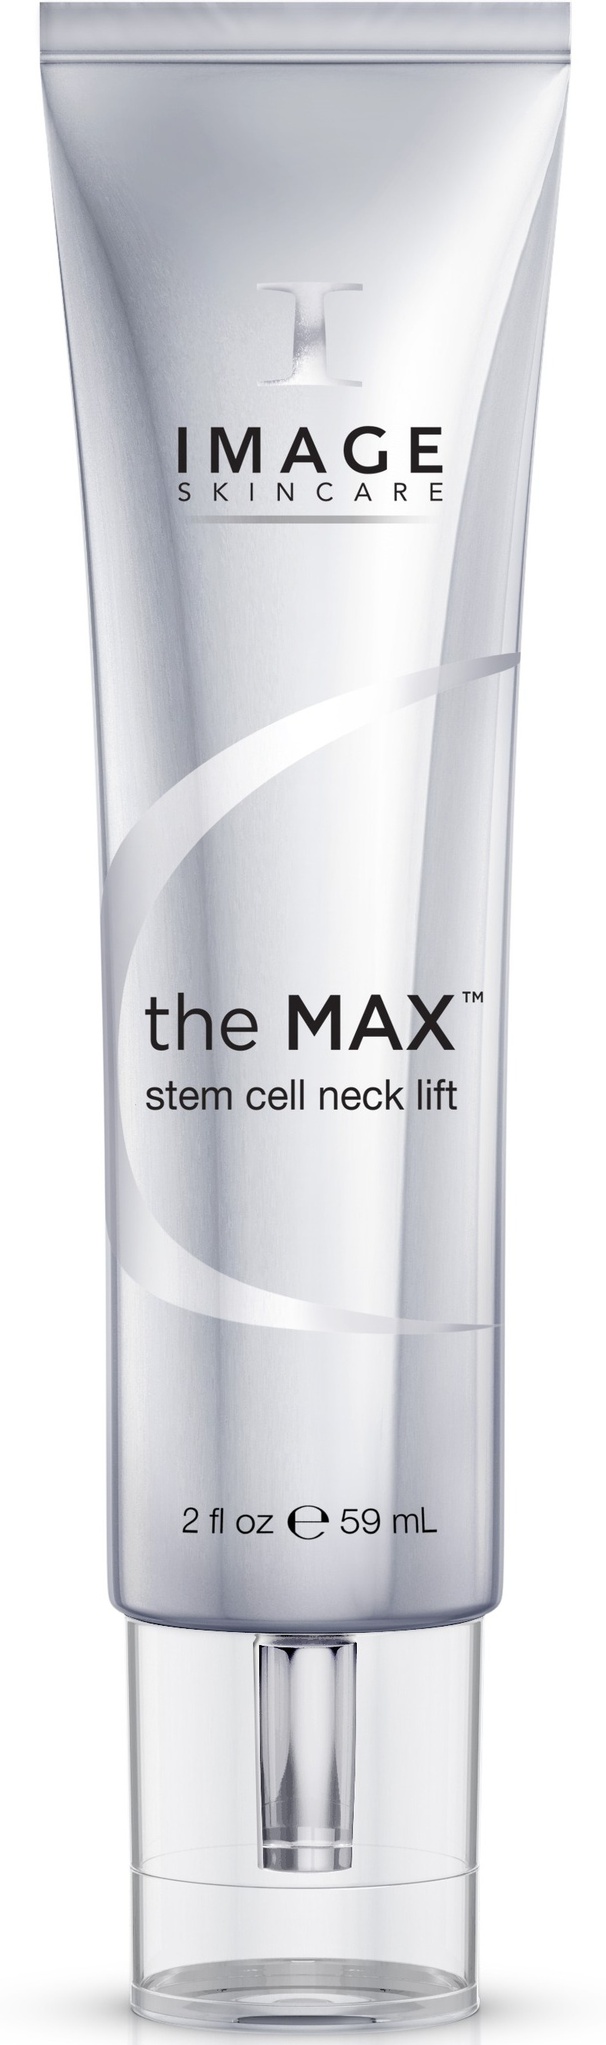 Image Skincare Max Stem Cell Neck Lift